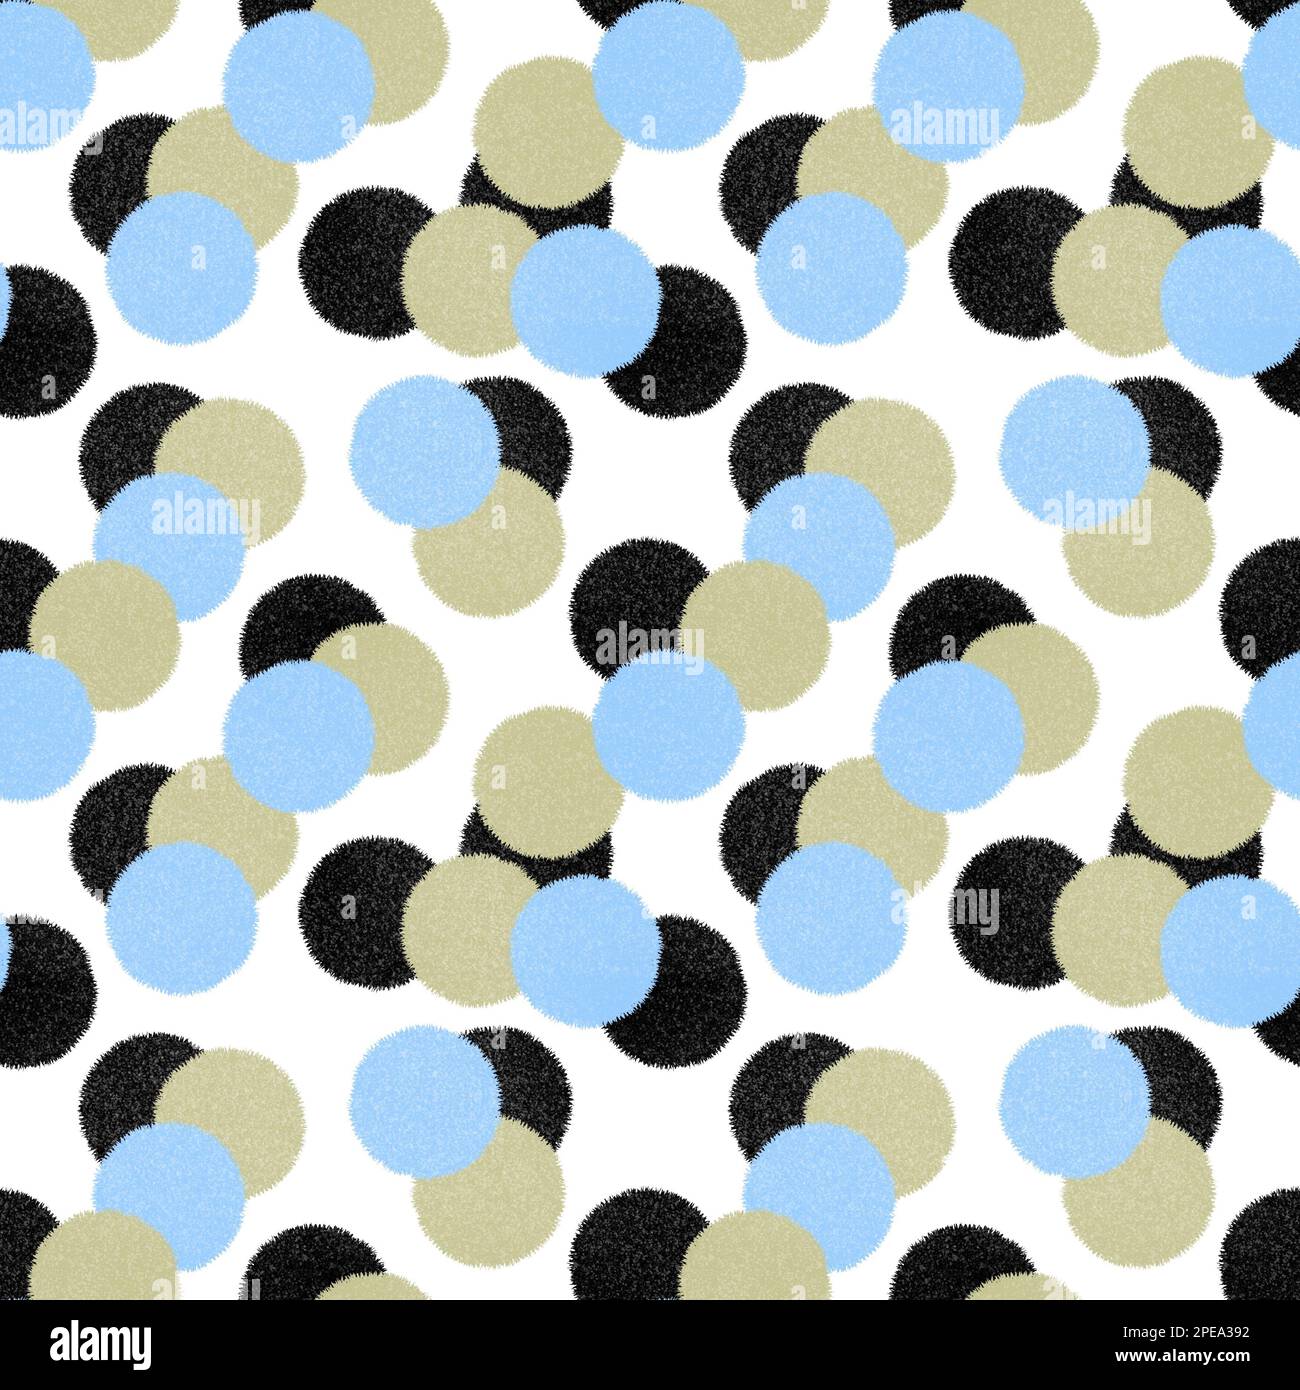 Navy Blue White Circle Pattern Tissue Paper